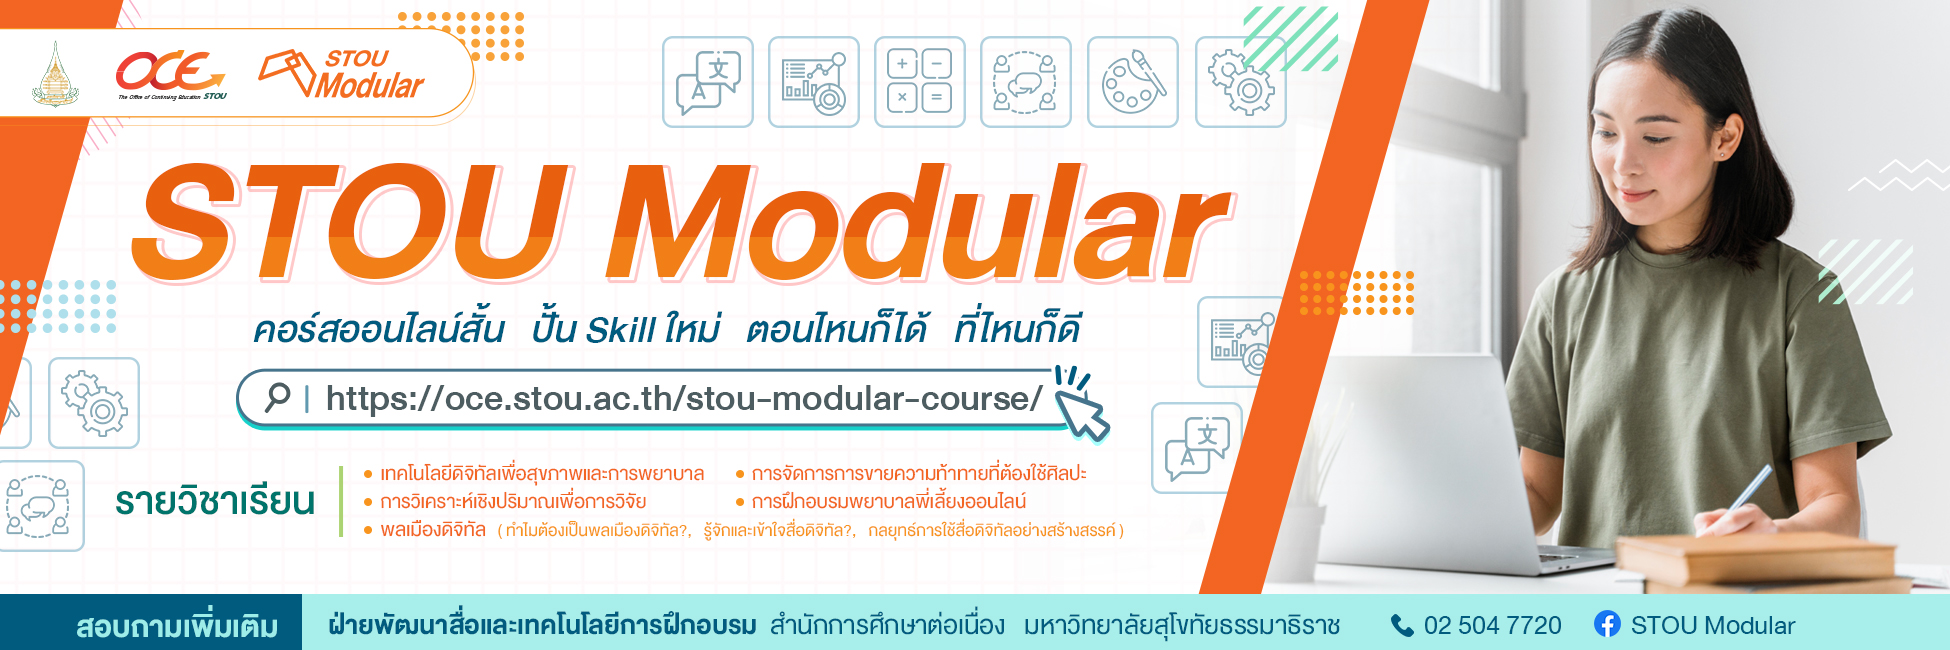 stou modular promote_pay_oceweb_v02